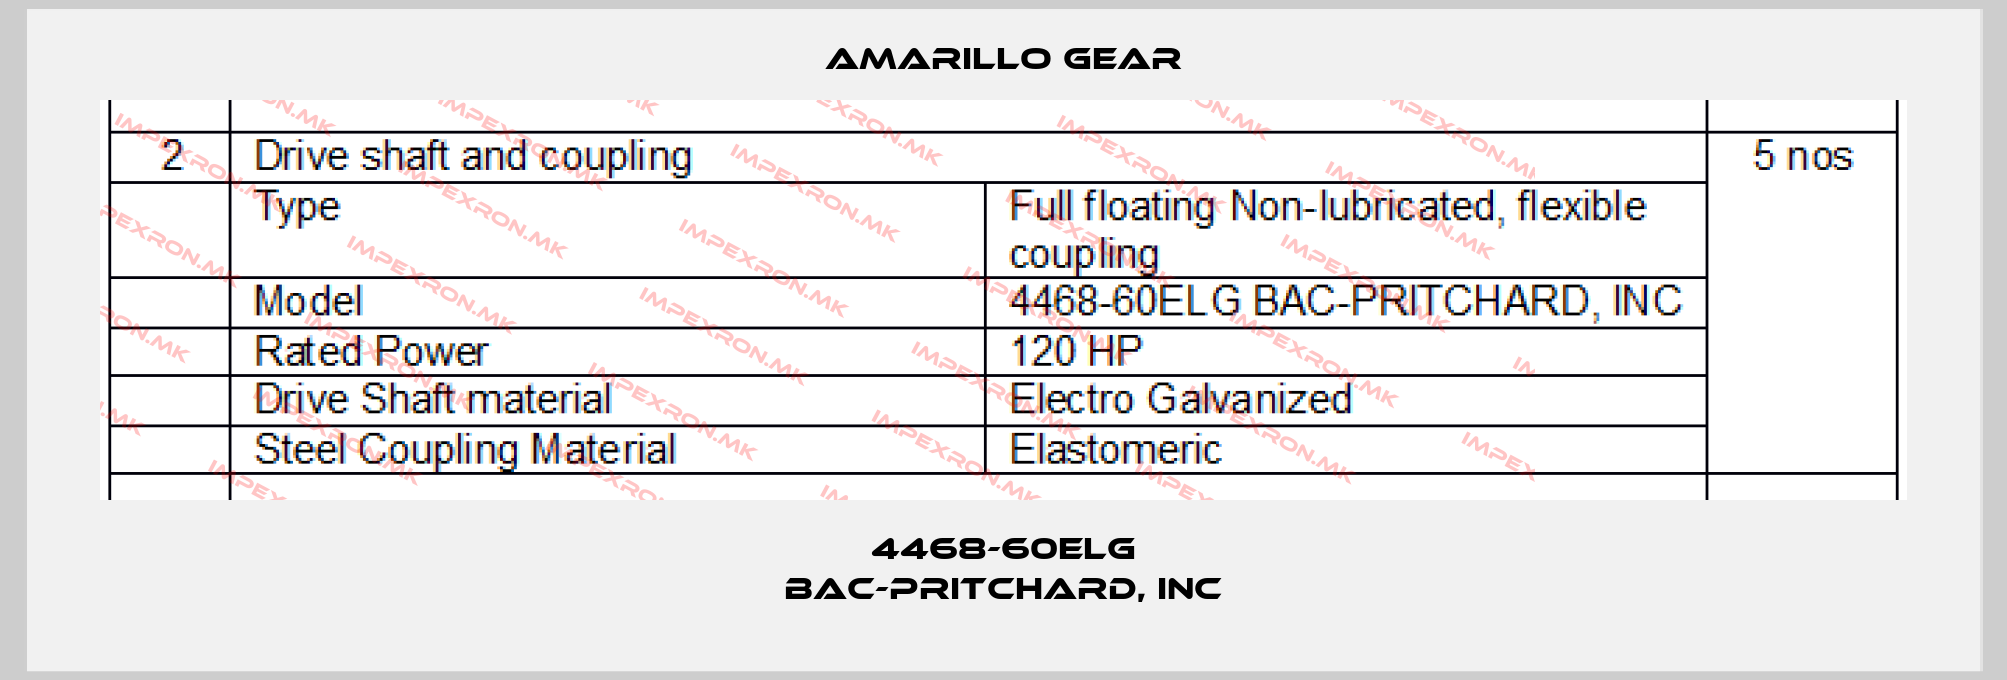 Amarillo Gear-4468-60ELG BAC-PRITCHARD, INCprice